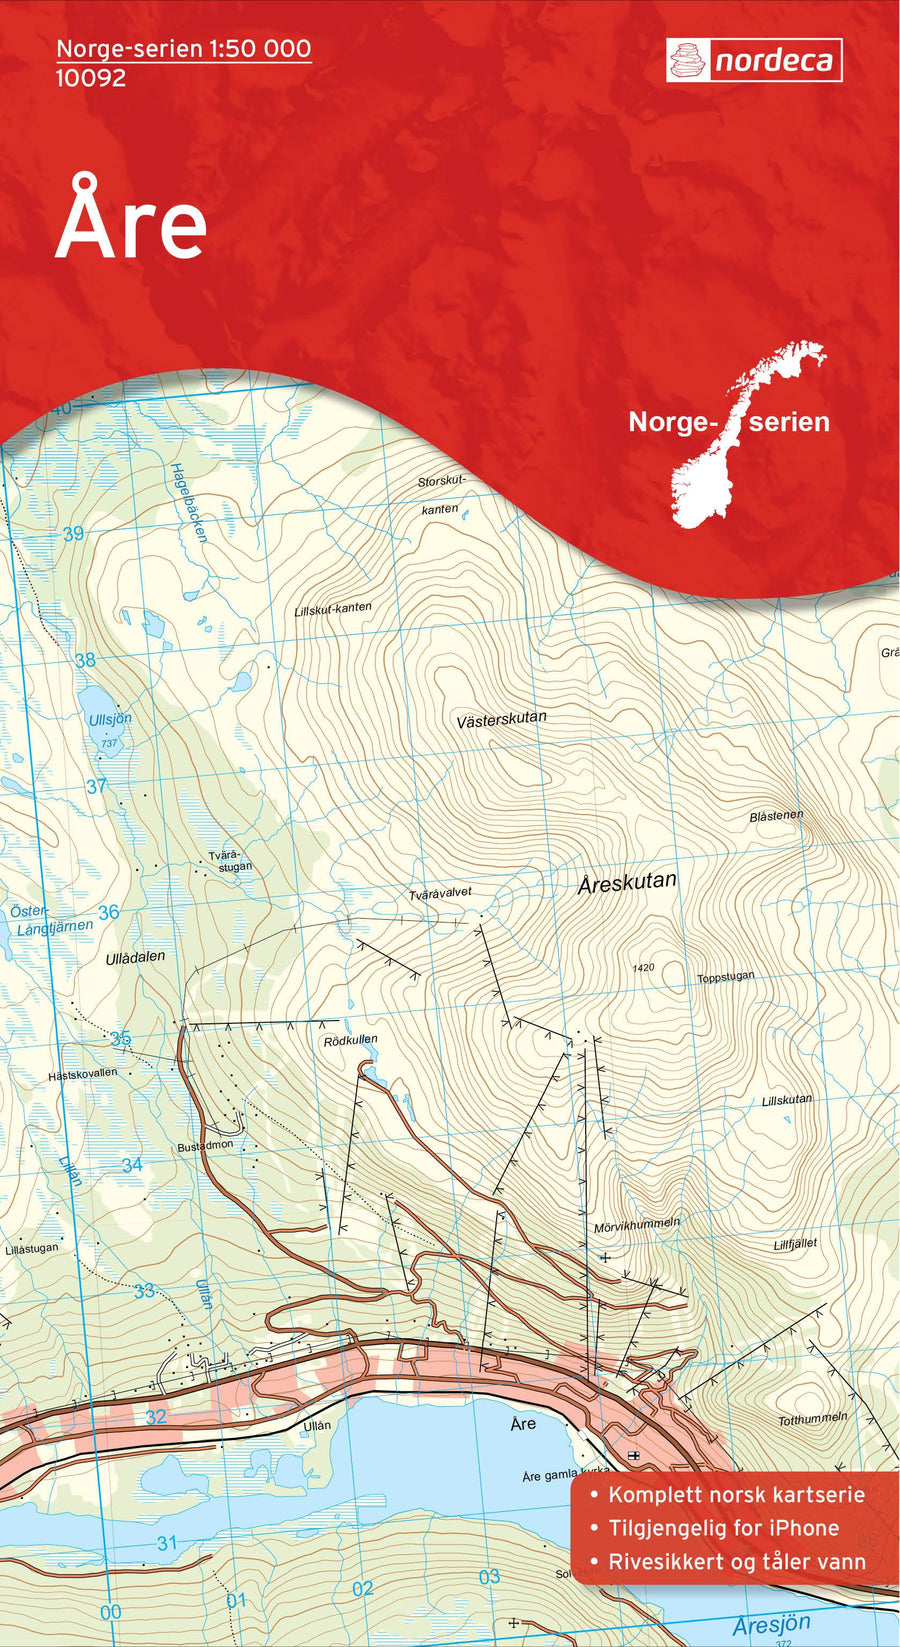 Carte de randonnée n° 10092 - Are (Norvège) | Nordeca - Norge-serien carte pliée Nordeca 